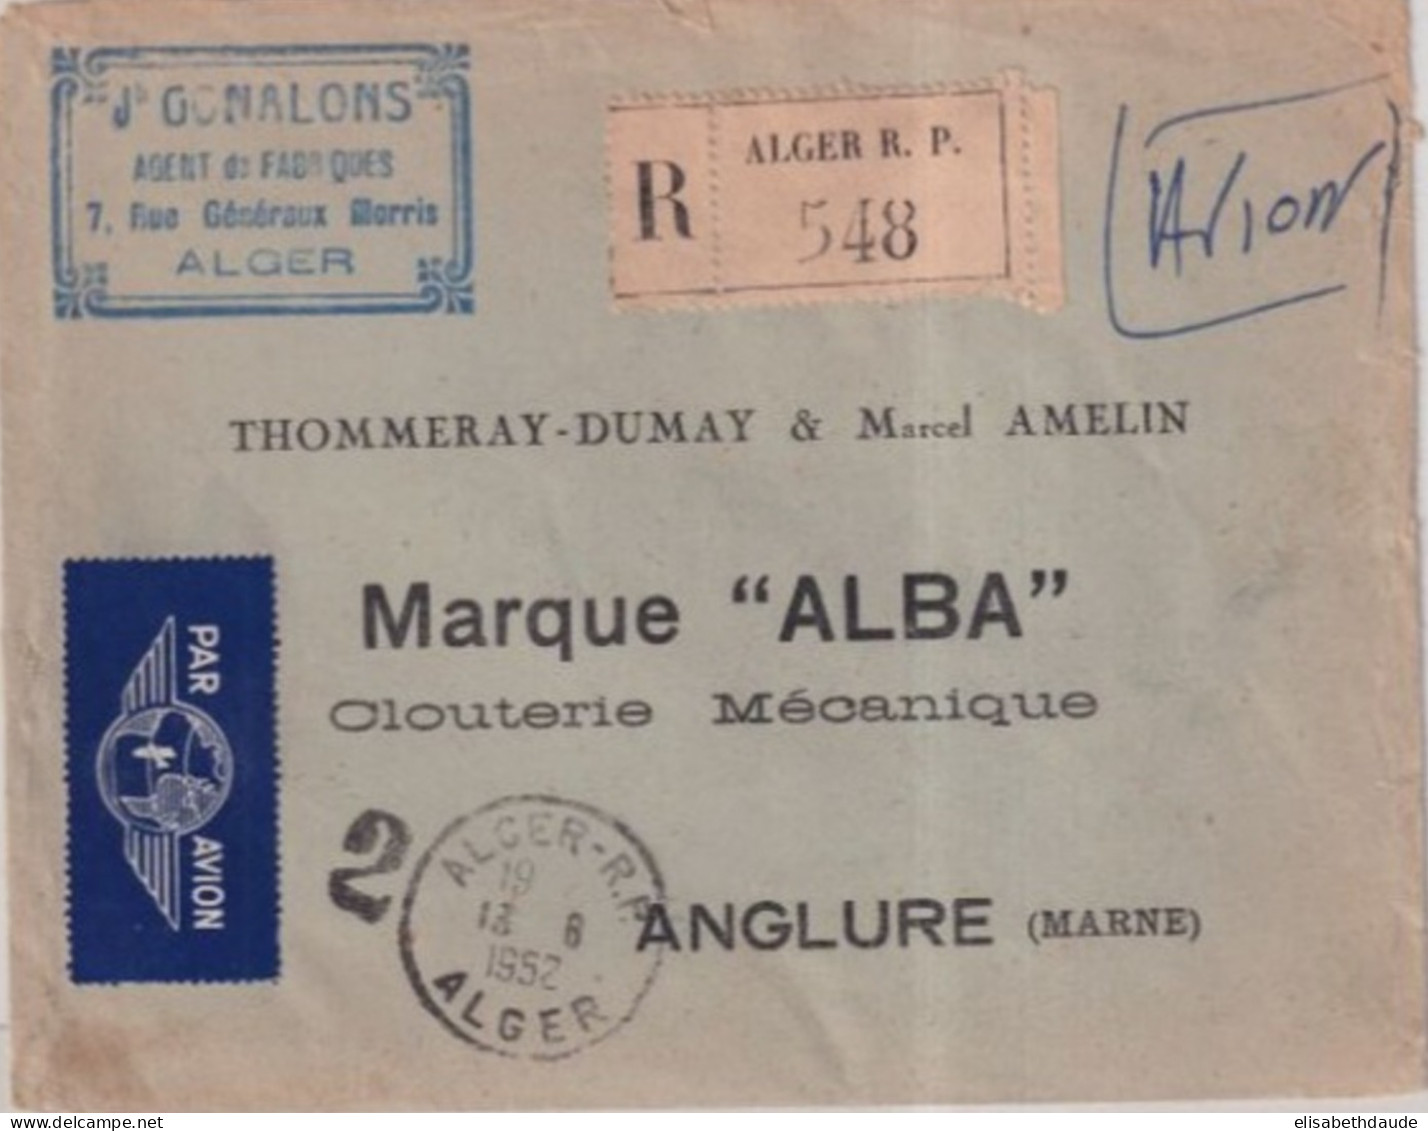 ALGERIE - 1952 - CACHET "GUICHET De RECOMMANDE" N°2 De ALGER - ENVELOPPE AVION => ANGLURE (MARNE) - Briefe U. Dokumente